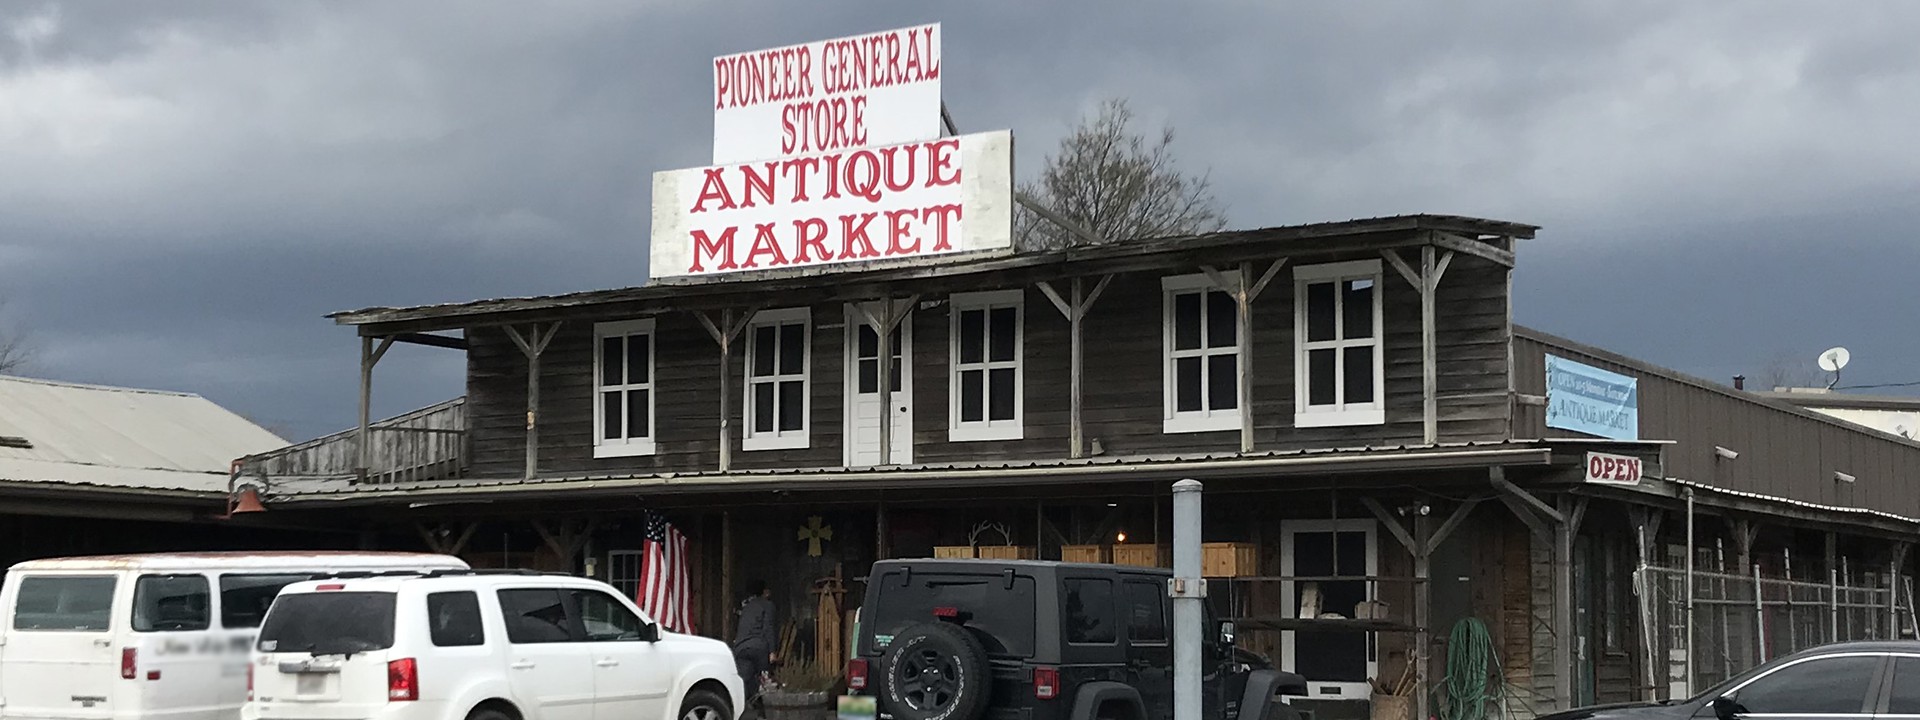 Pioneer General Store and Flea Market_1920x800